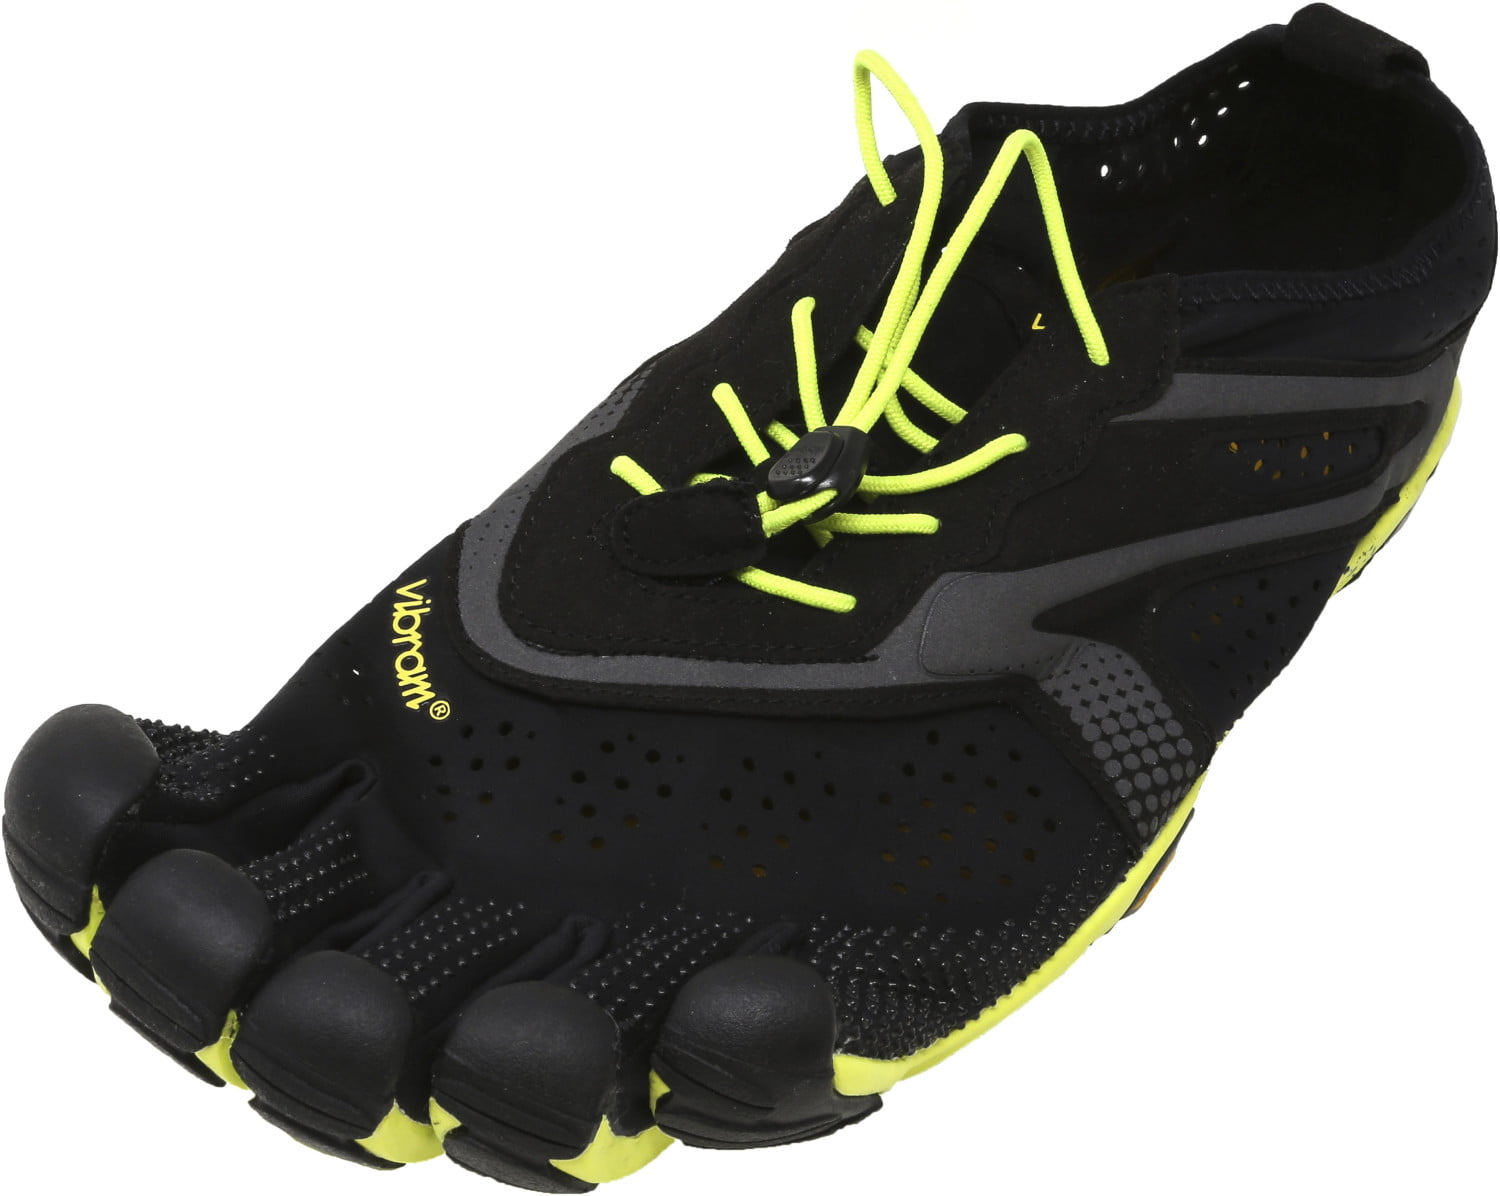 vibram running shoes